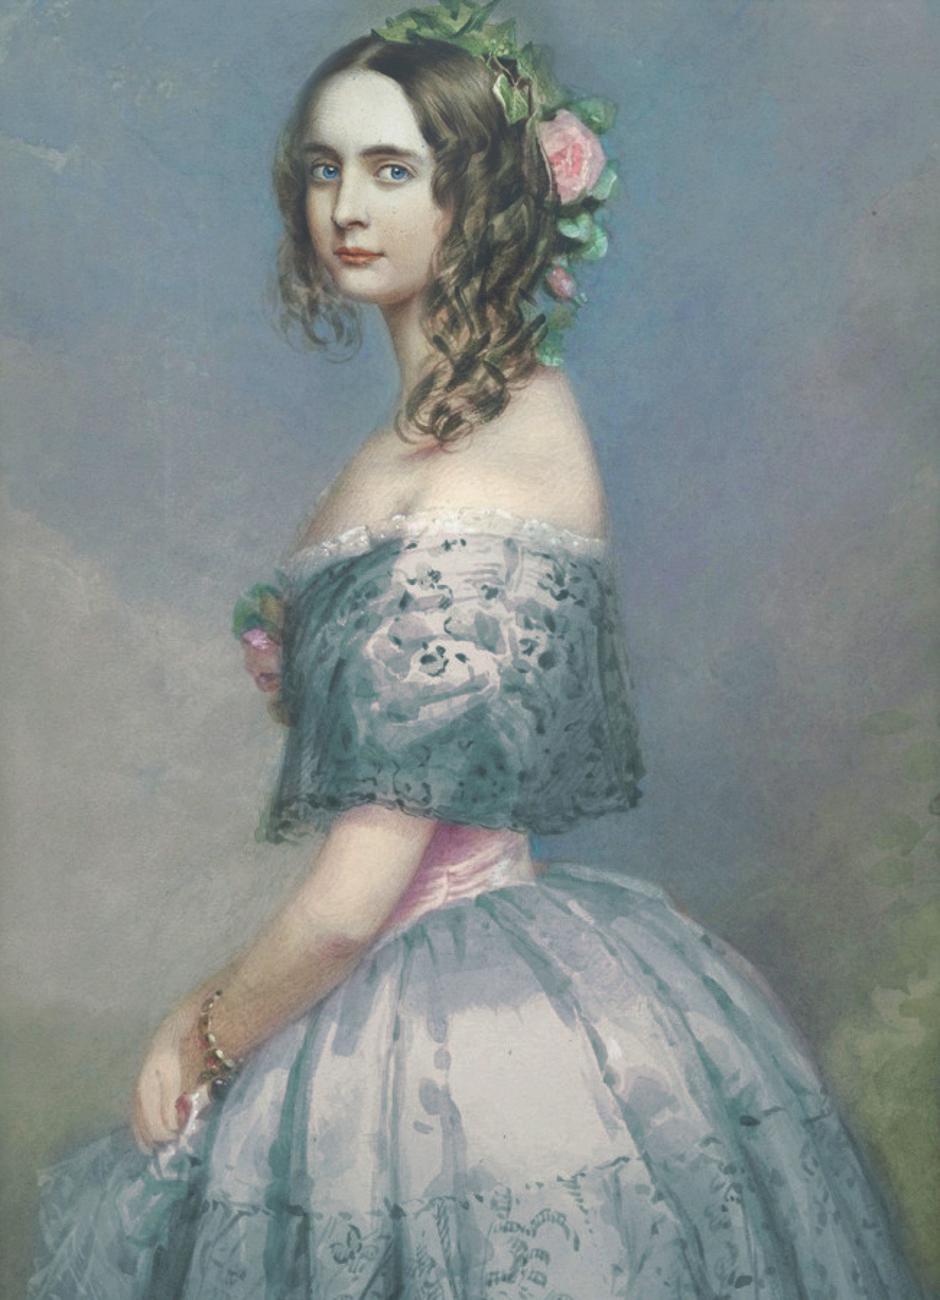 Princeza Aleksandra bavarska | Author: Wikipedia